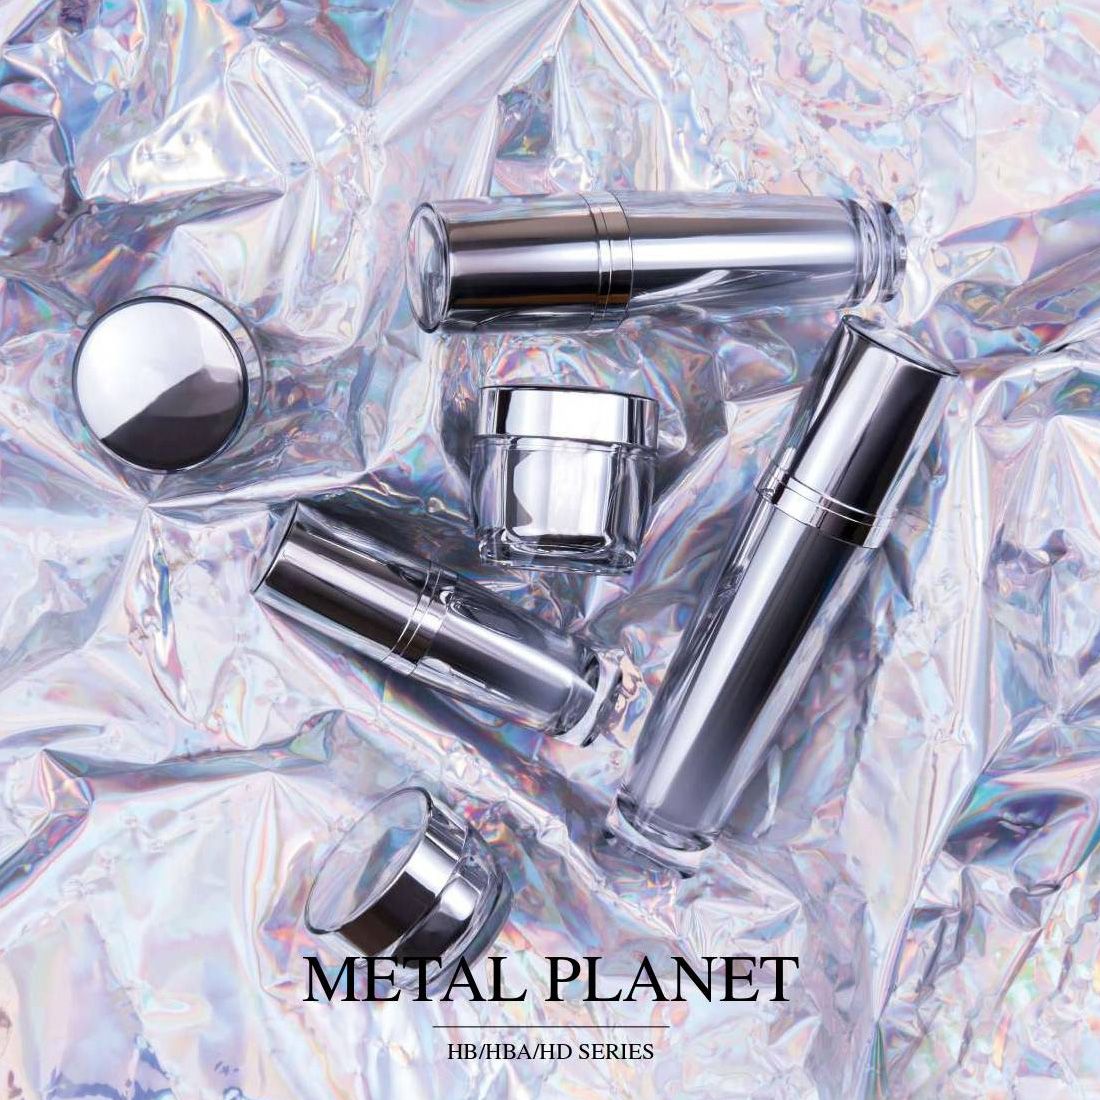 Metal Planet (Kemasan Kosmetik & Perawatan Kulit Mewah Akrilik) - Seri HB / HBA / HD